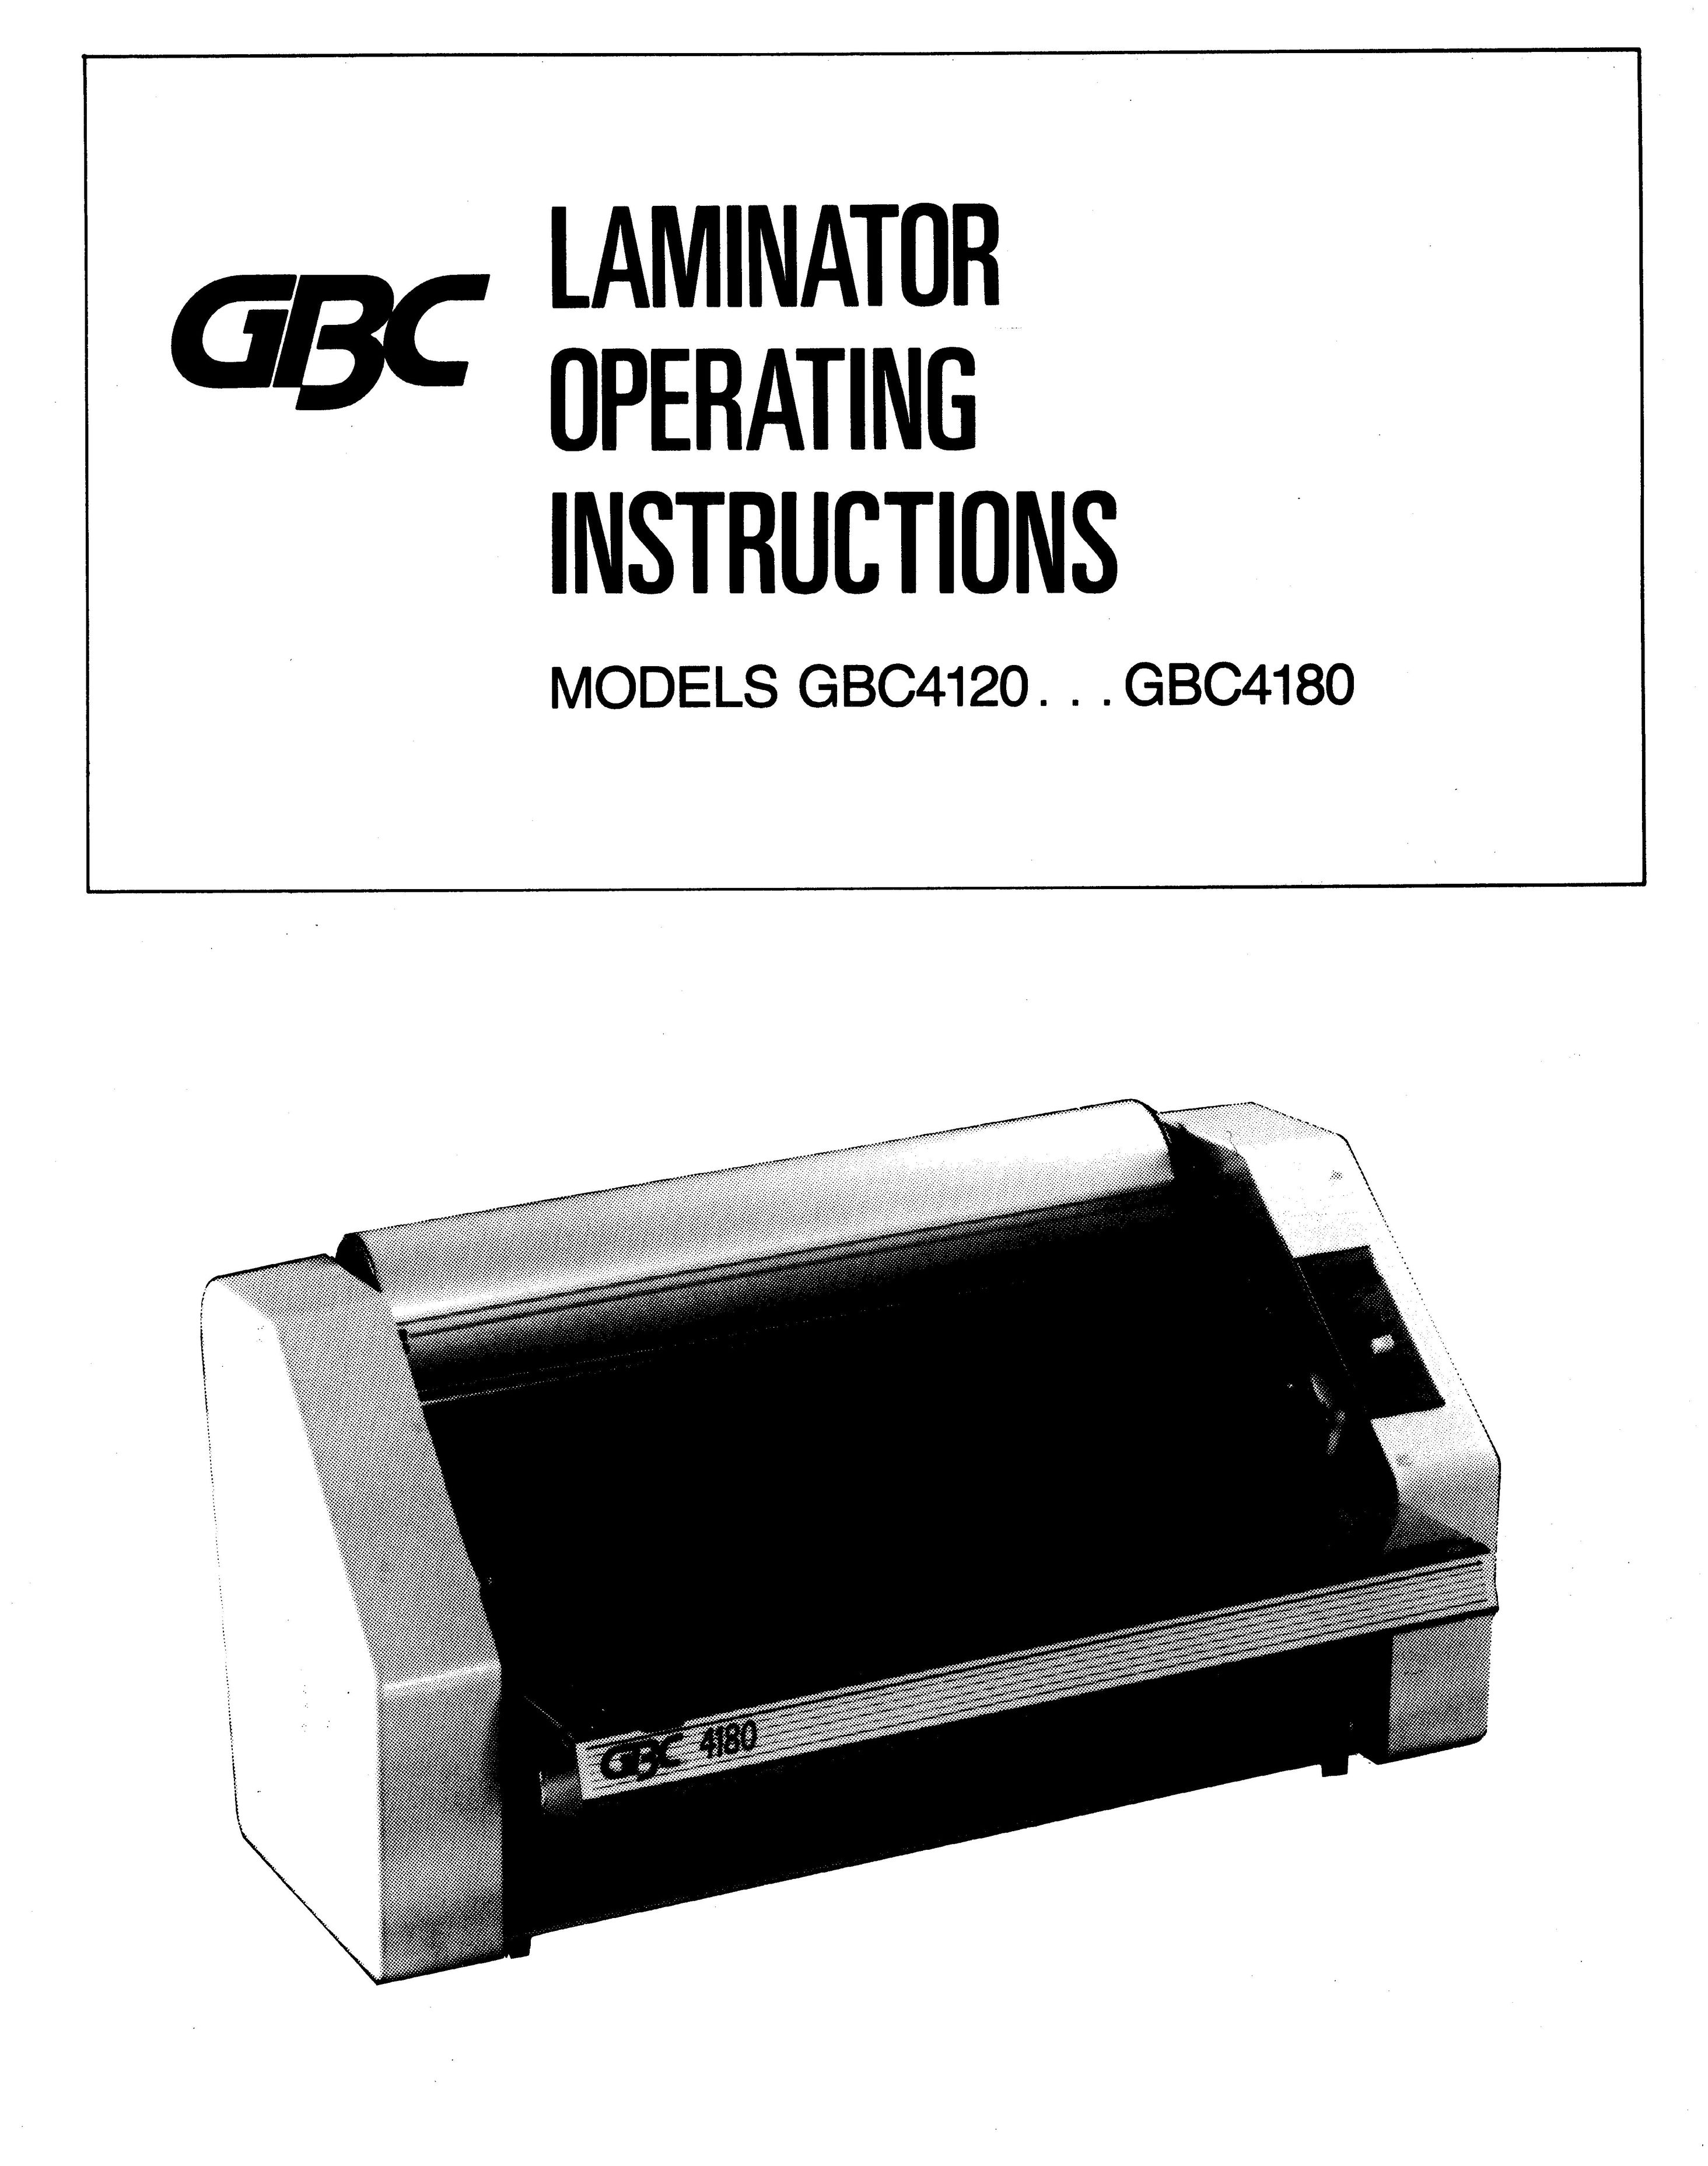 GBC 4120 Laminator User Manual